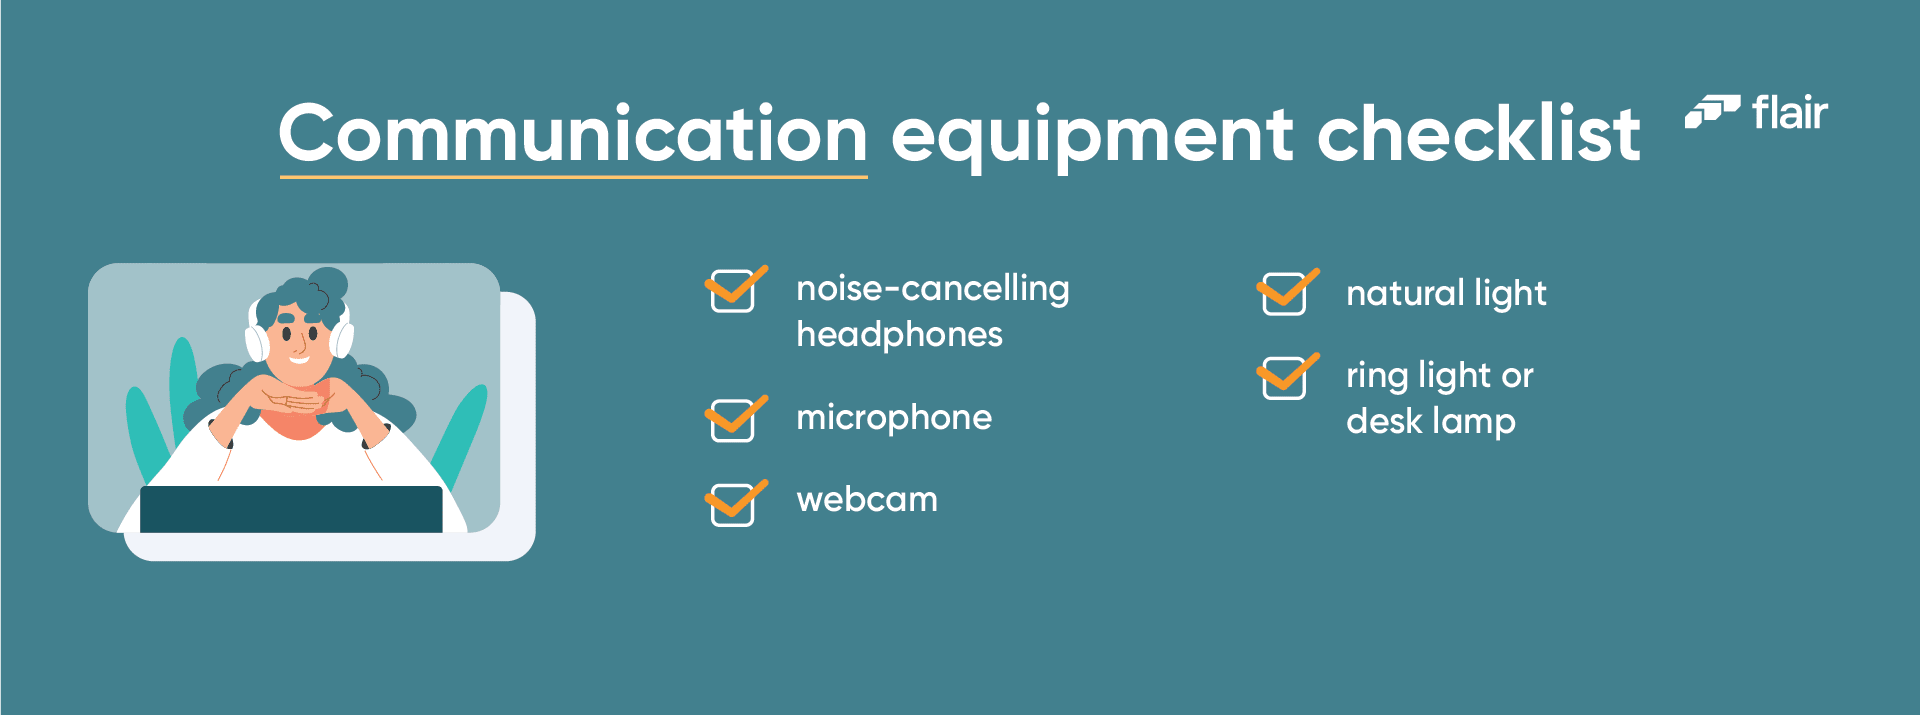 communication equipment checklist